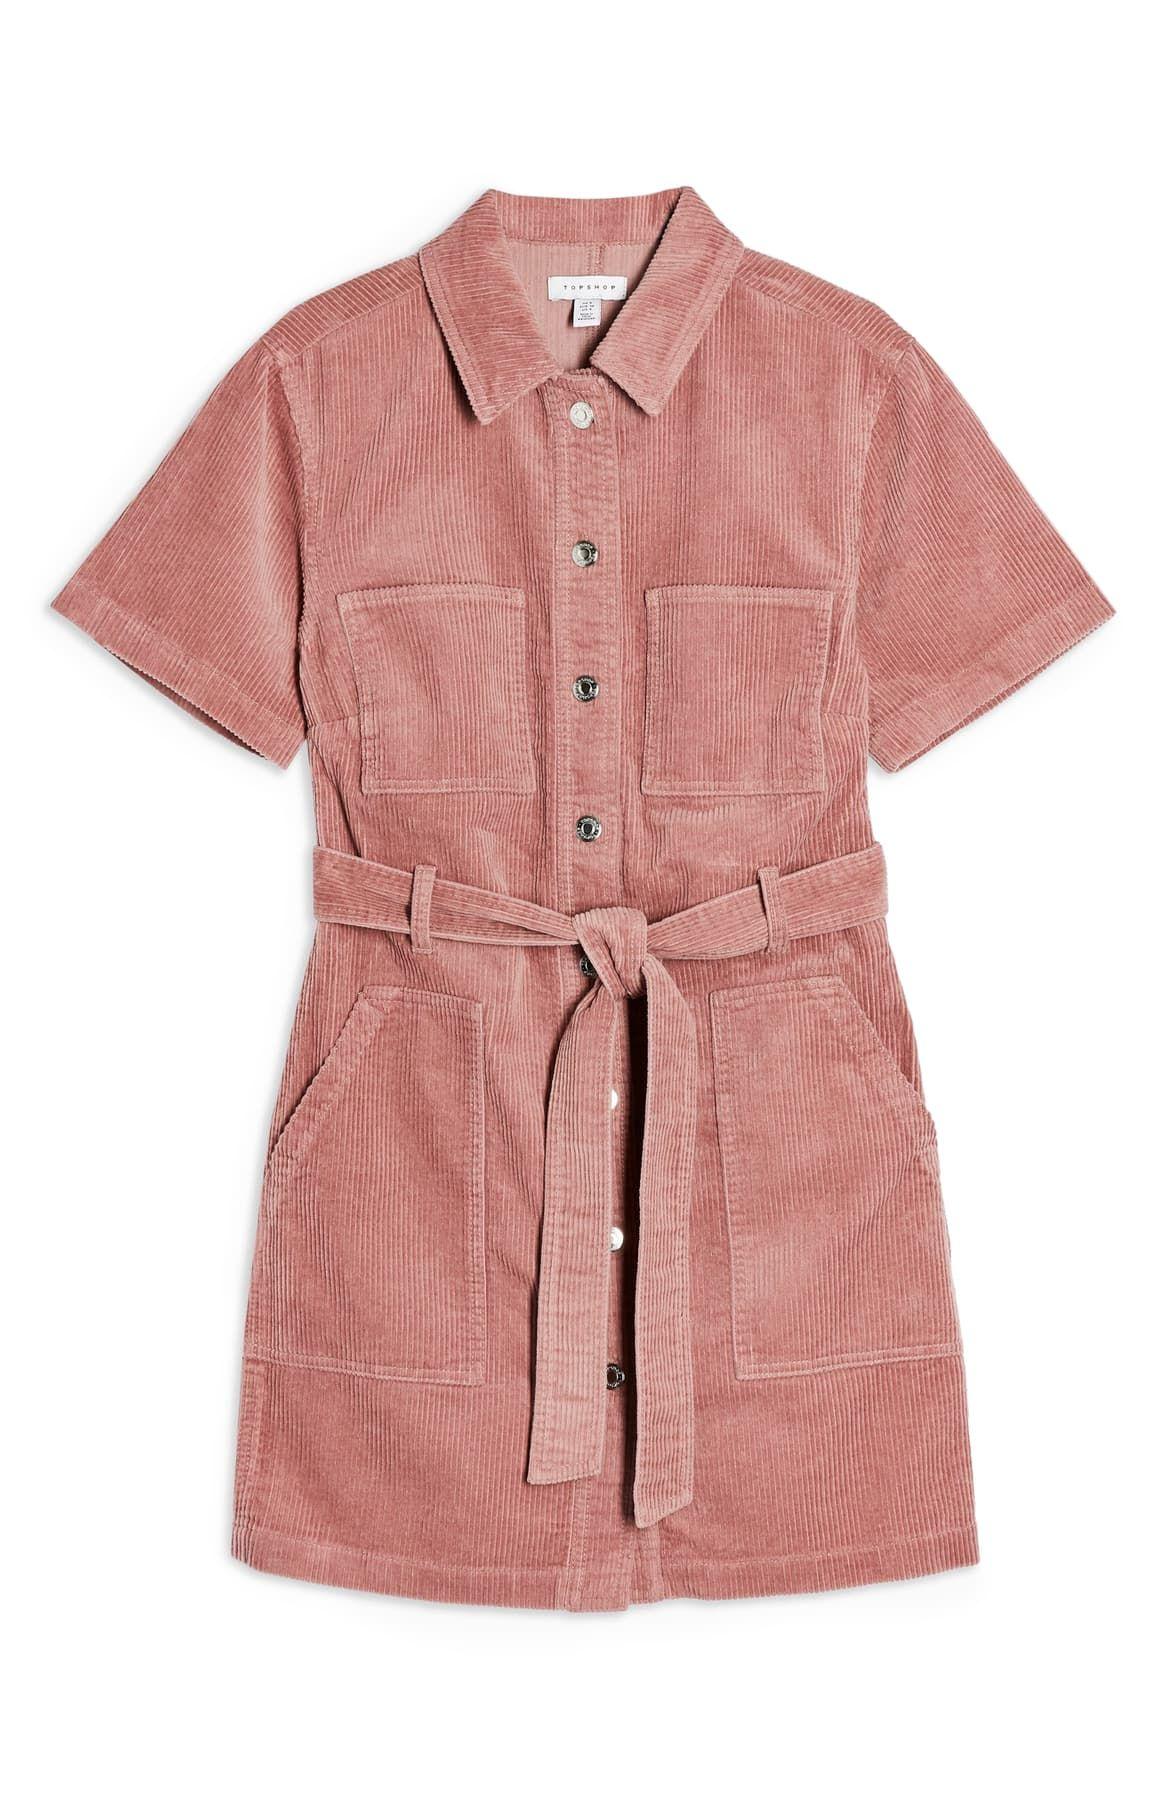 TOPSHOP Corduroy Short Sleeve Shirt Dress in Pink | Lyst